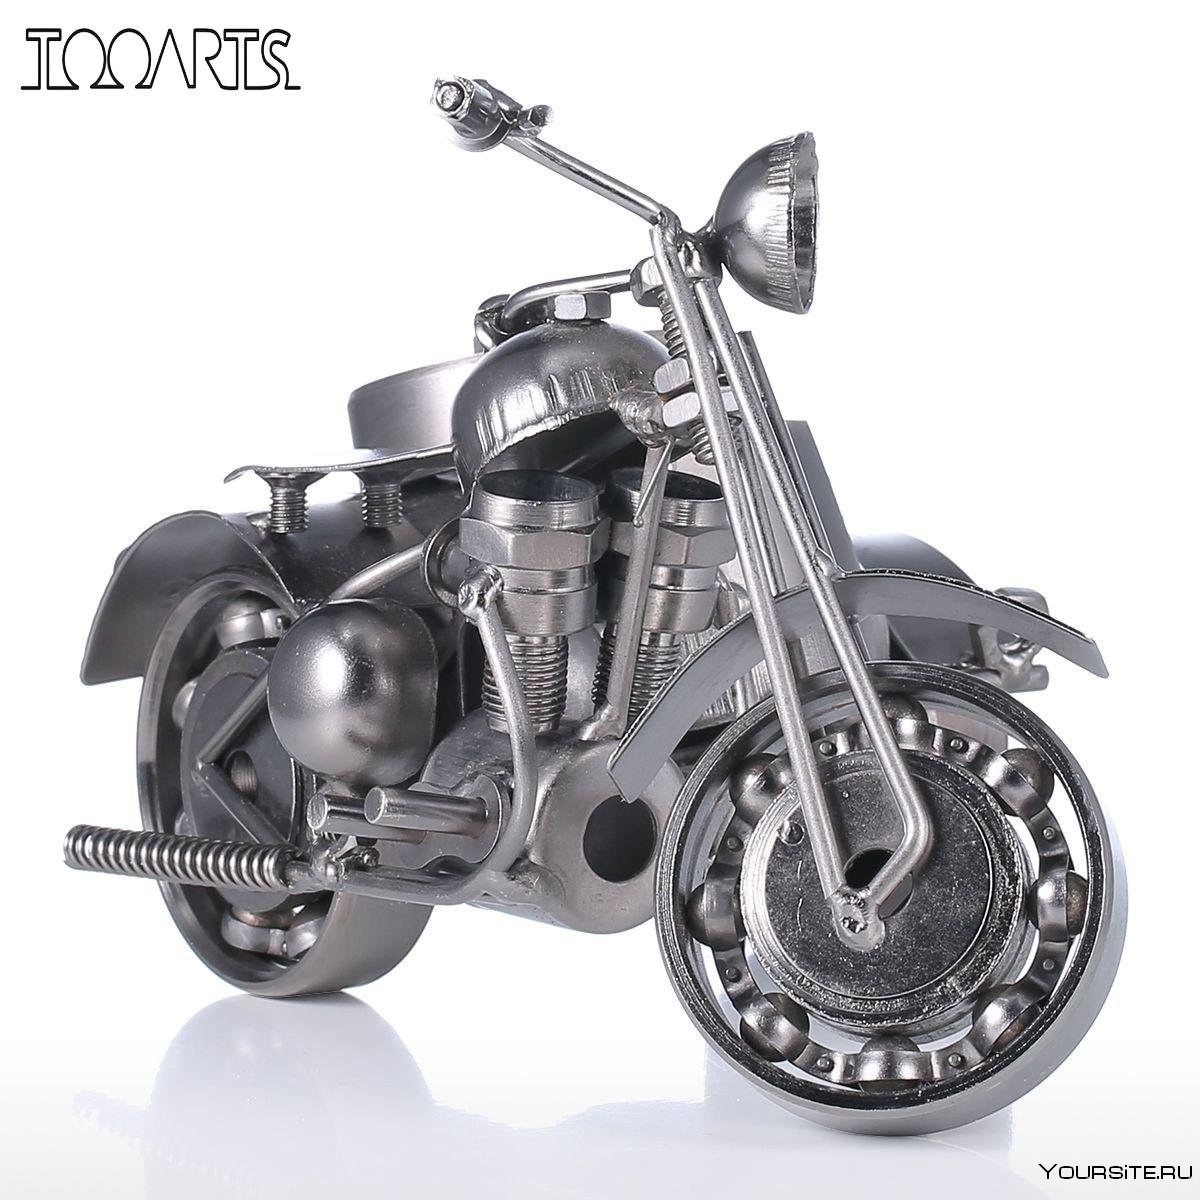 Фигурка кроссового мотоцикла из металла